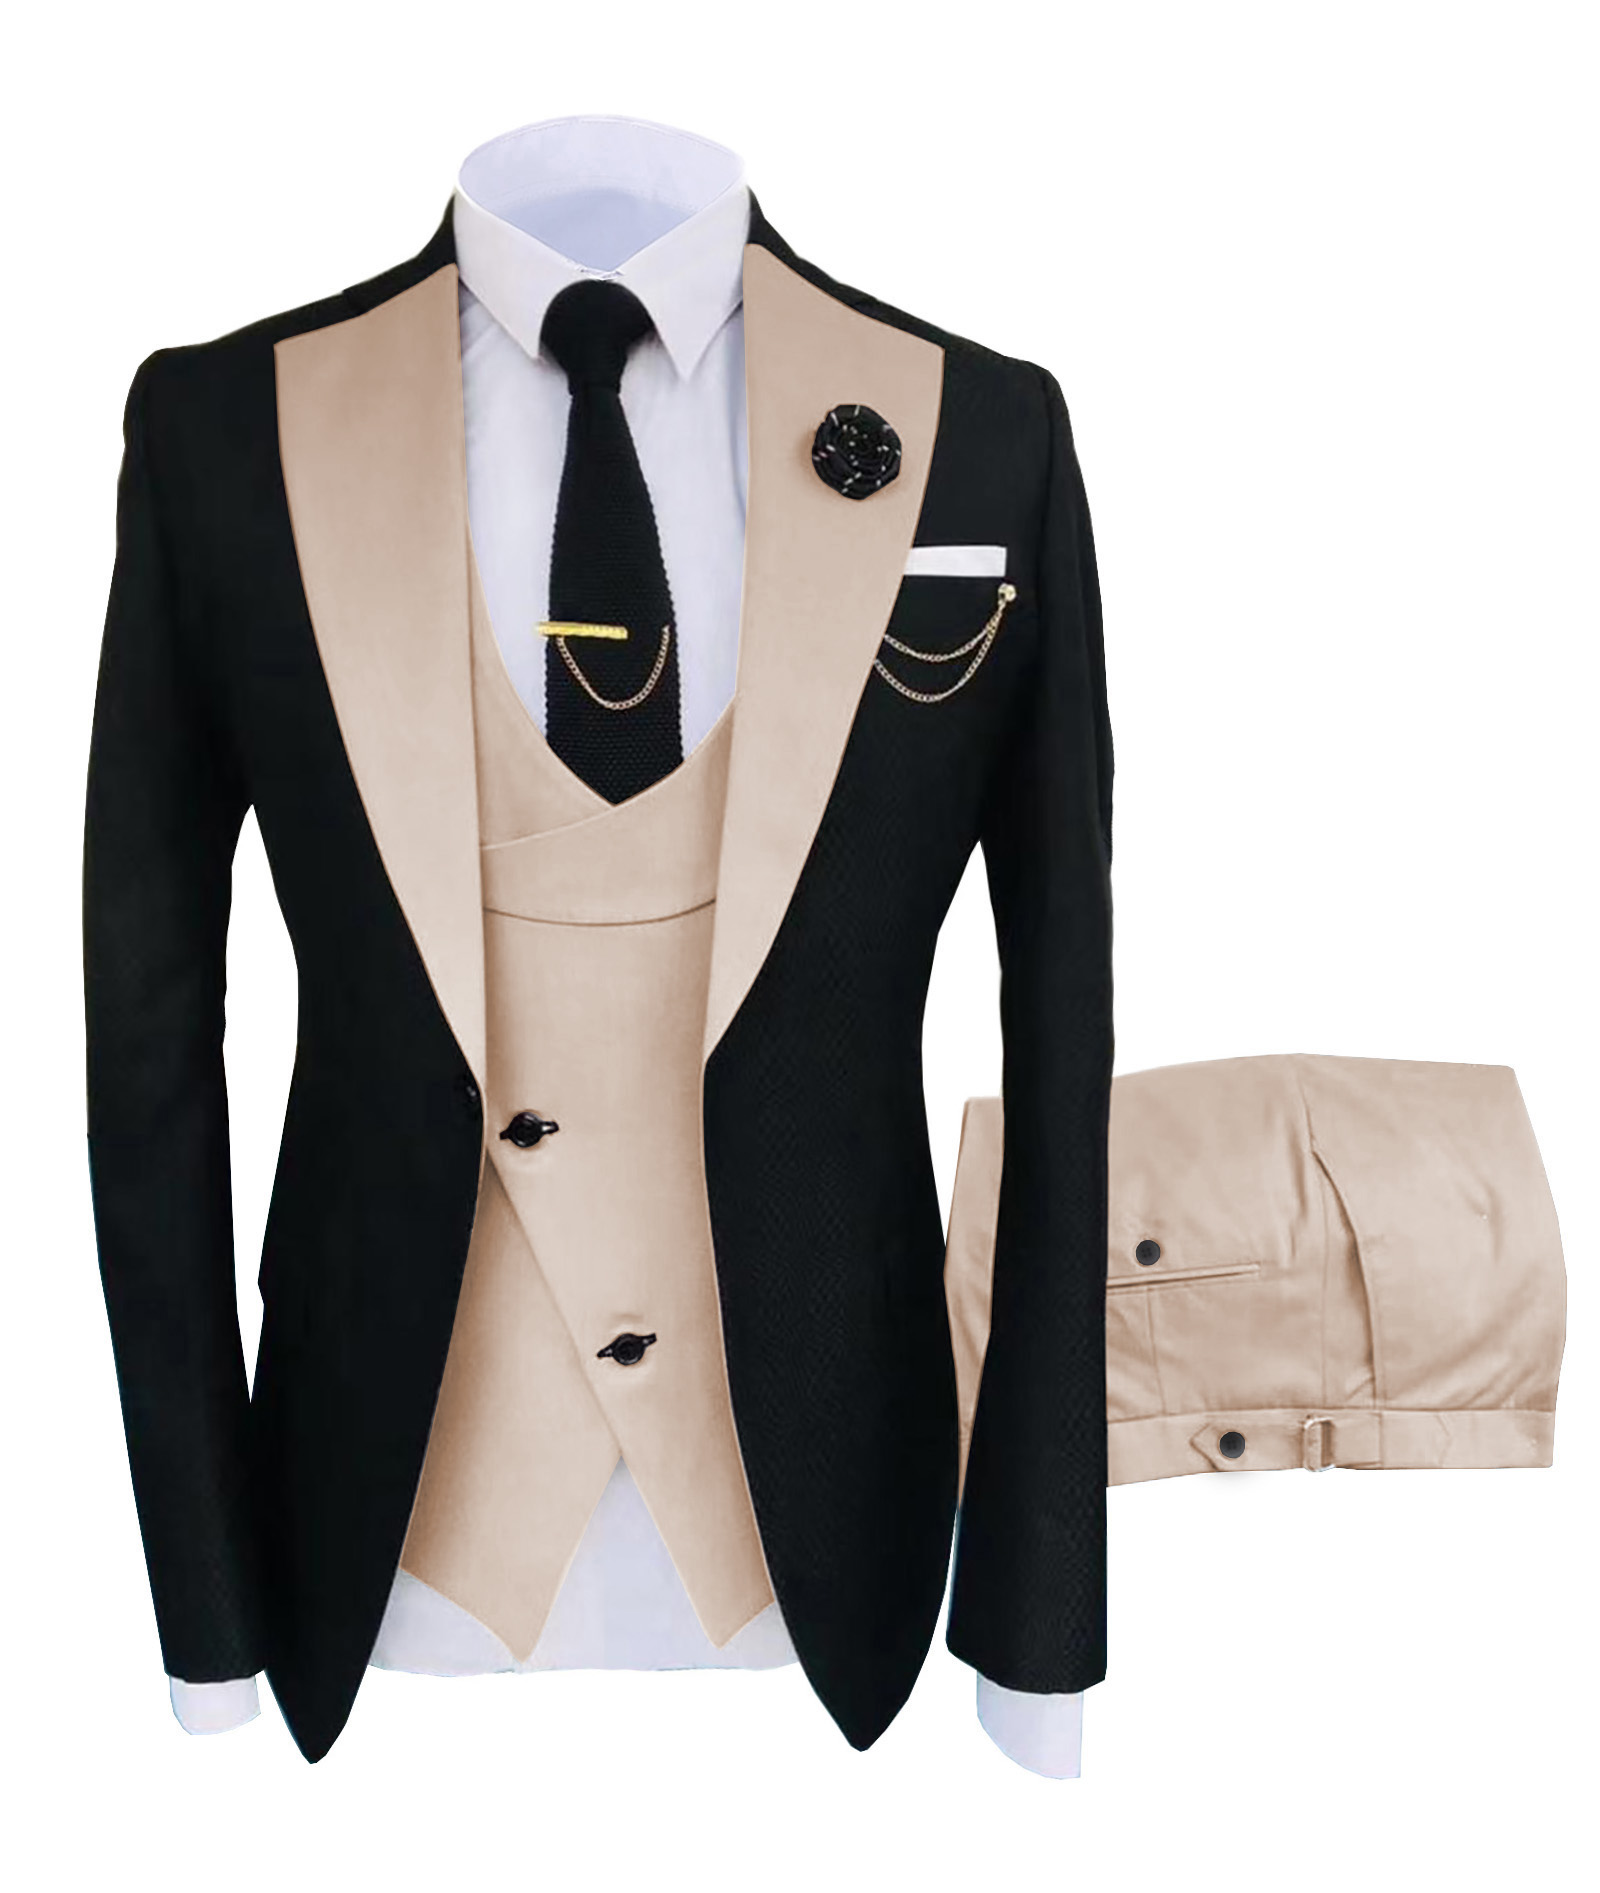 New-Costume-Homme-Popular-Clothing-Luxury-Party-Stage-Men-s-Suit-Groomsmen-Regular-Fit-Tuxedo-3-1.jpg